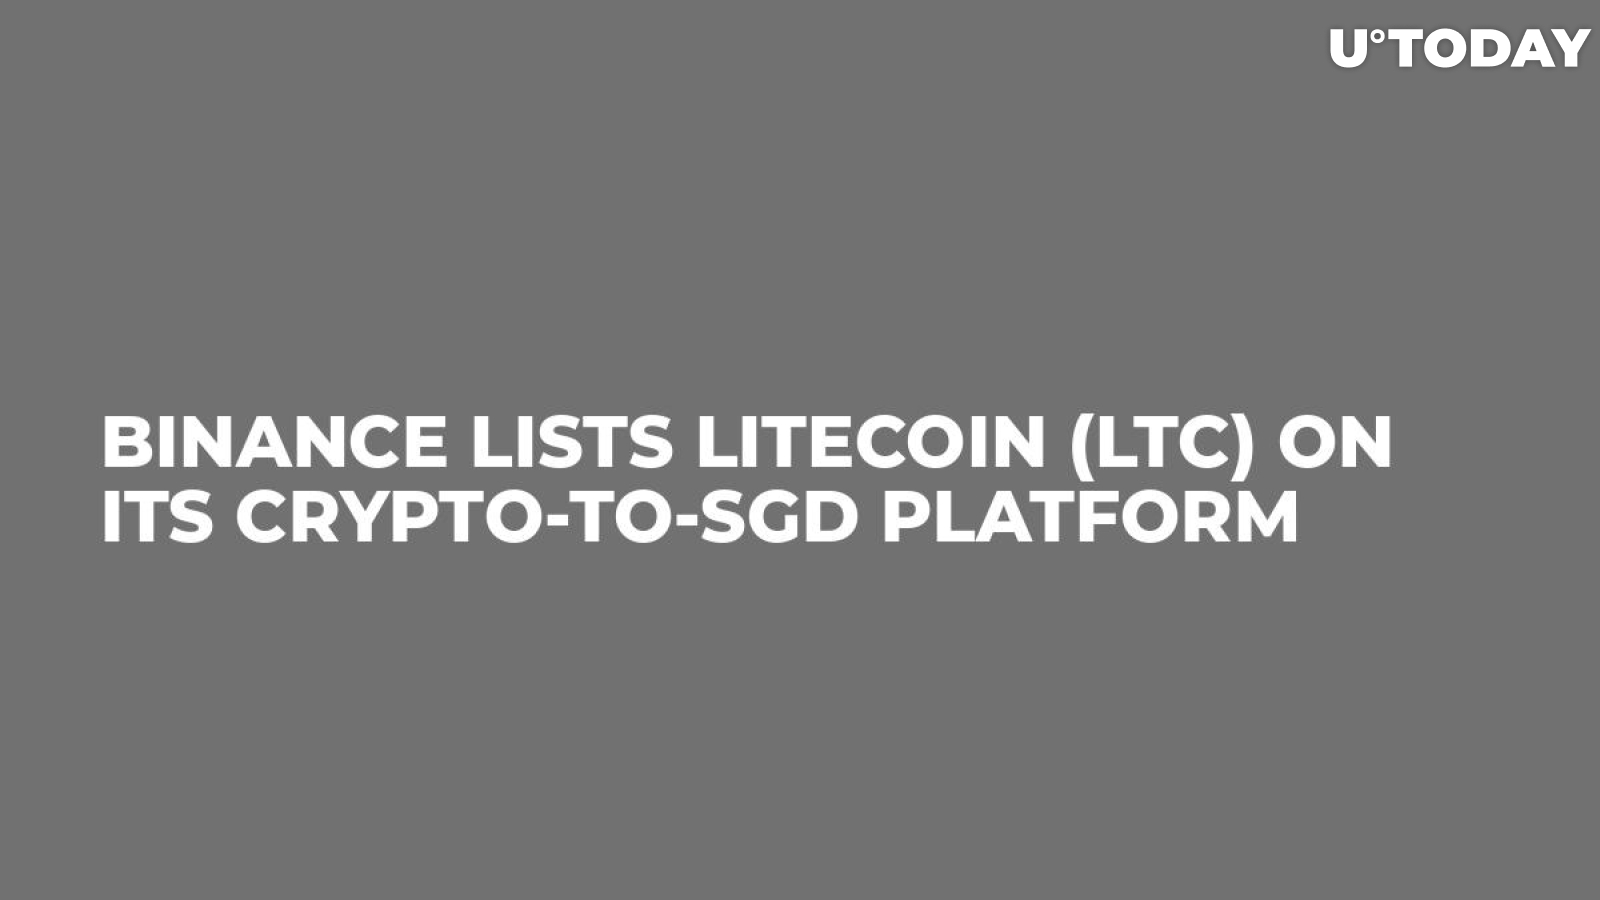 Binance Lists Litecoin (LTC) on Its Crypto-to-SGD Platform